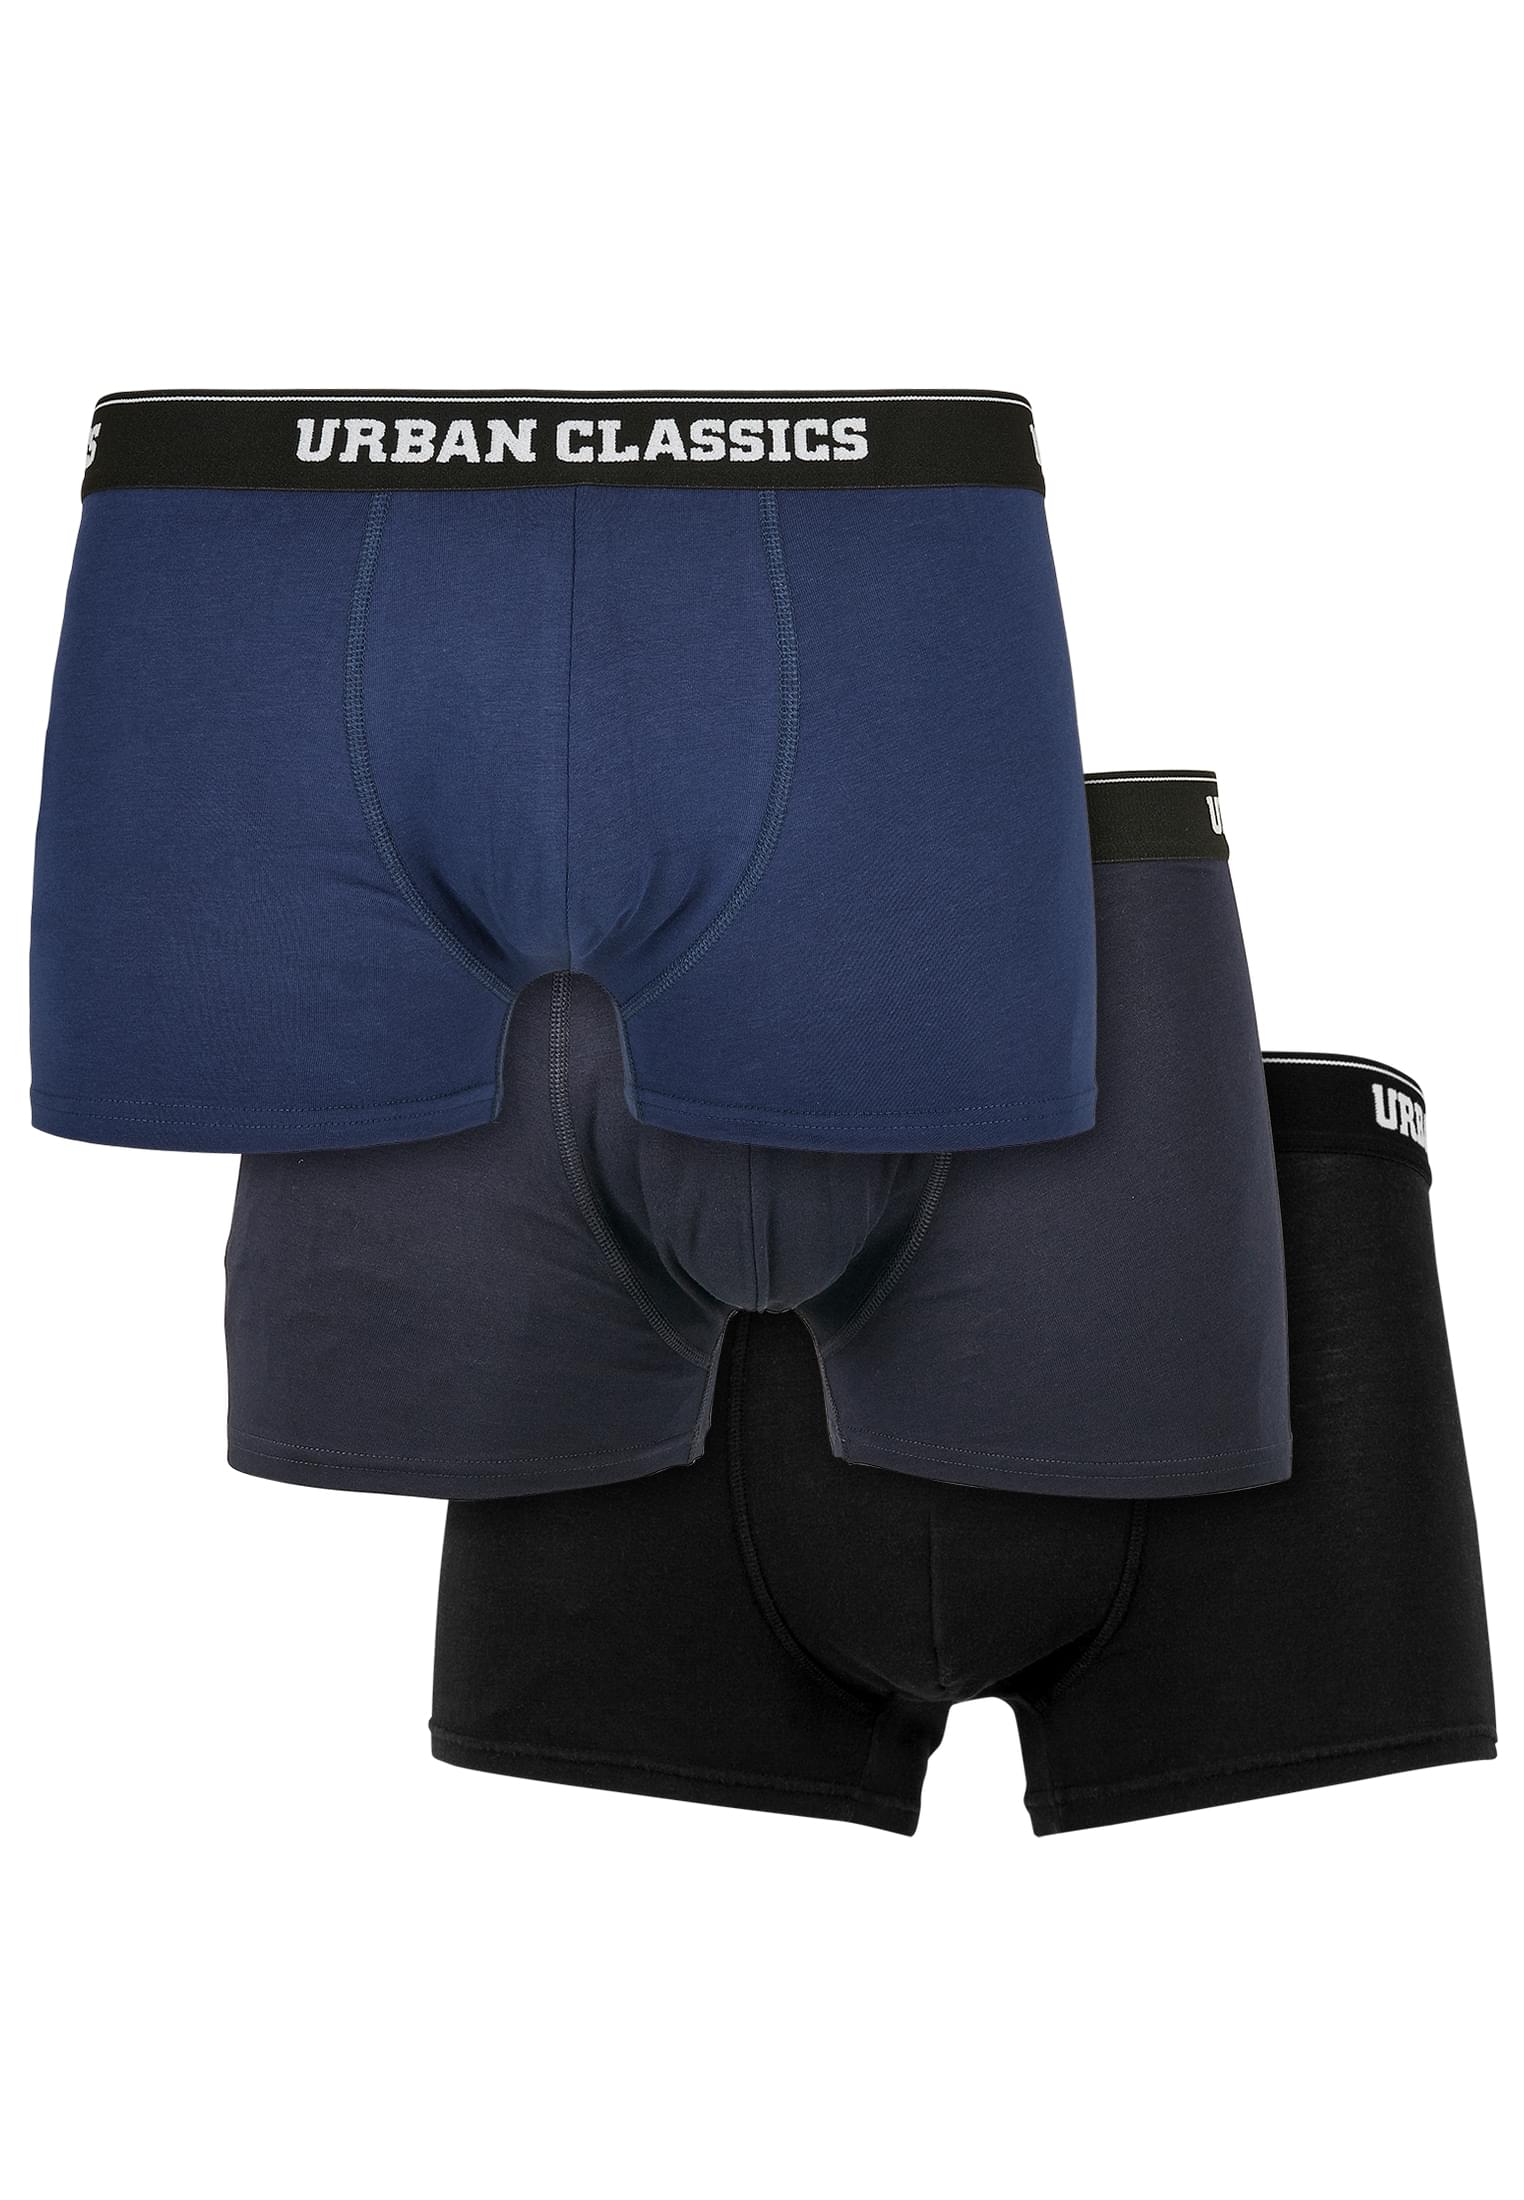 Боксеры Urban Classics Boxershorts, цвет darkblue+navy+black